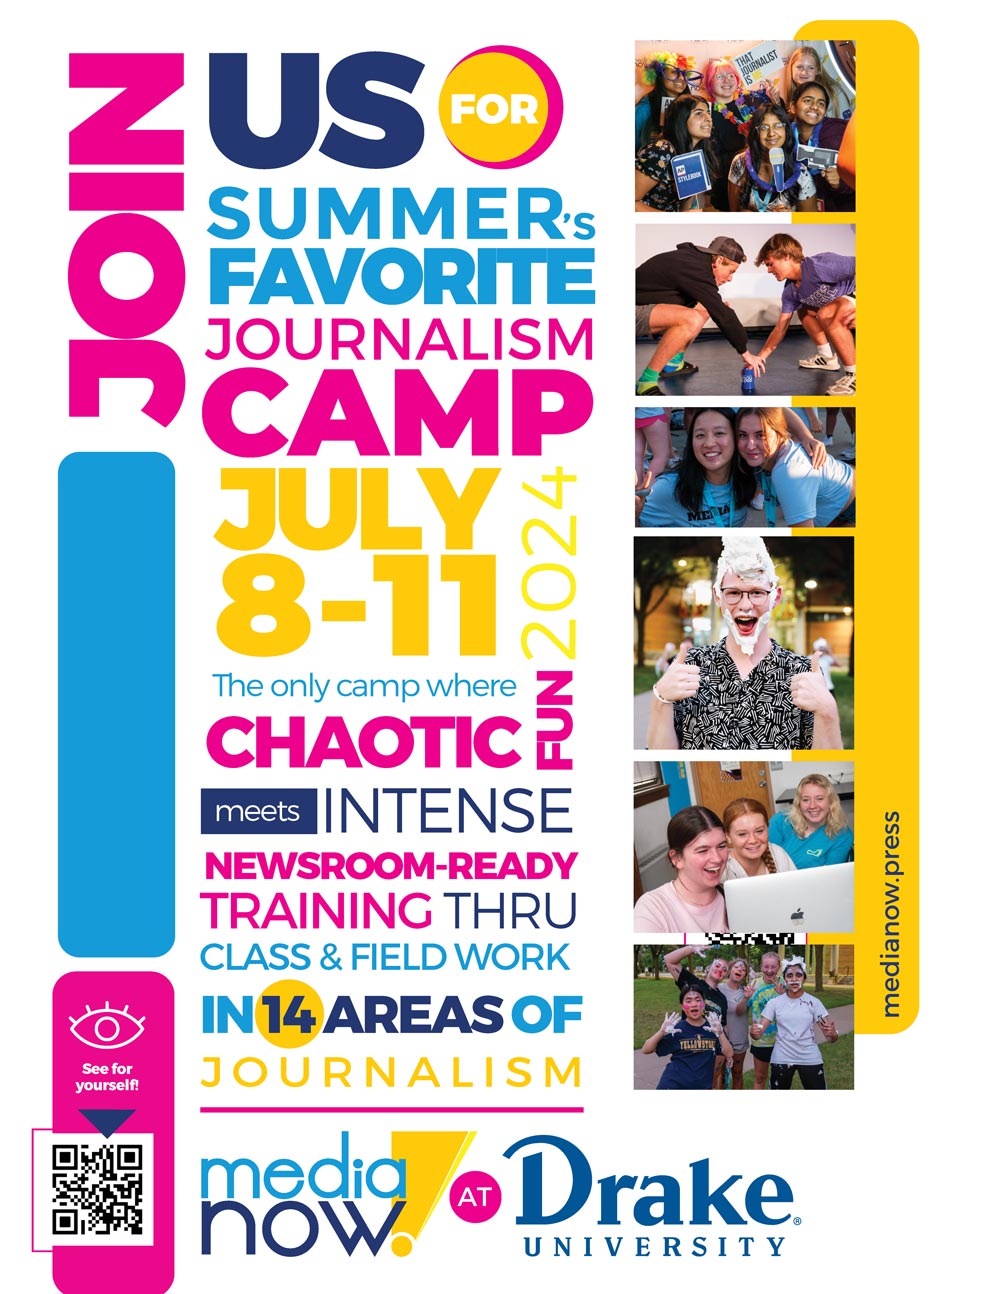 Media Now camp flyer